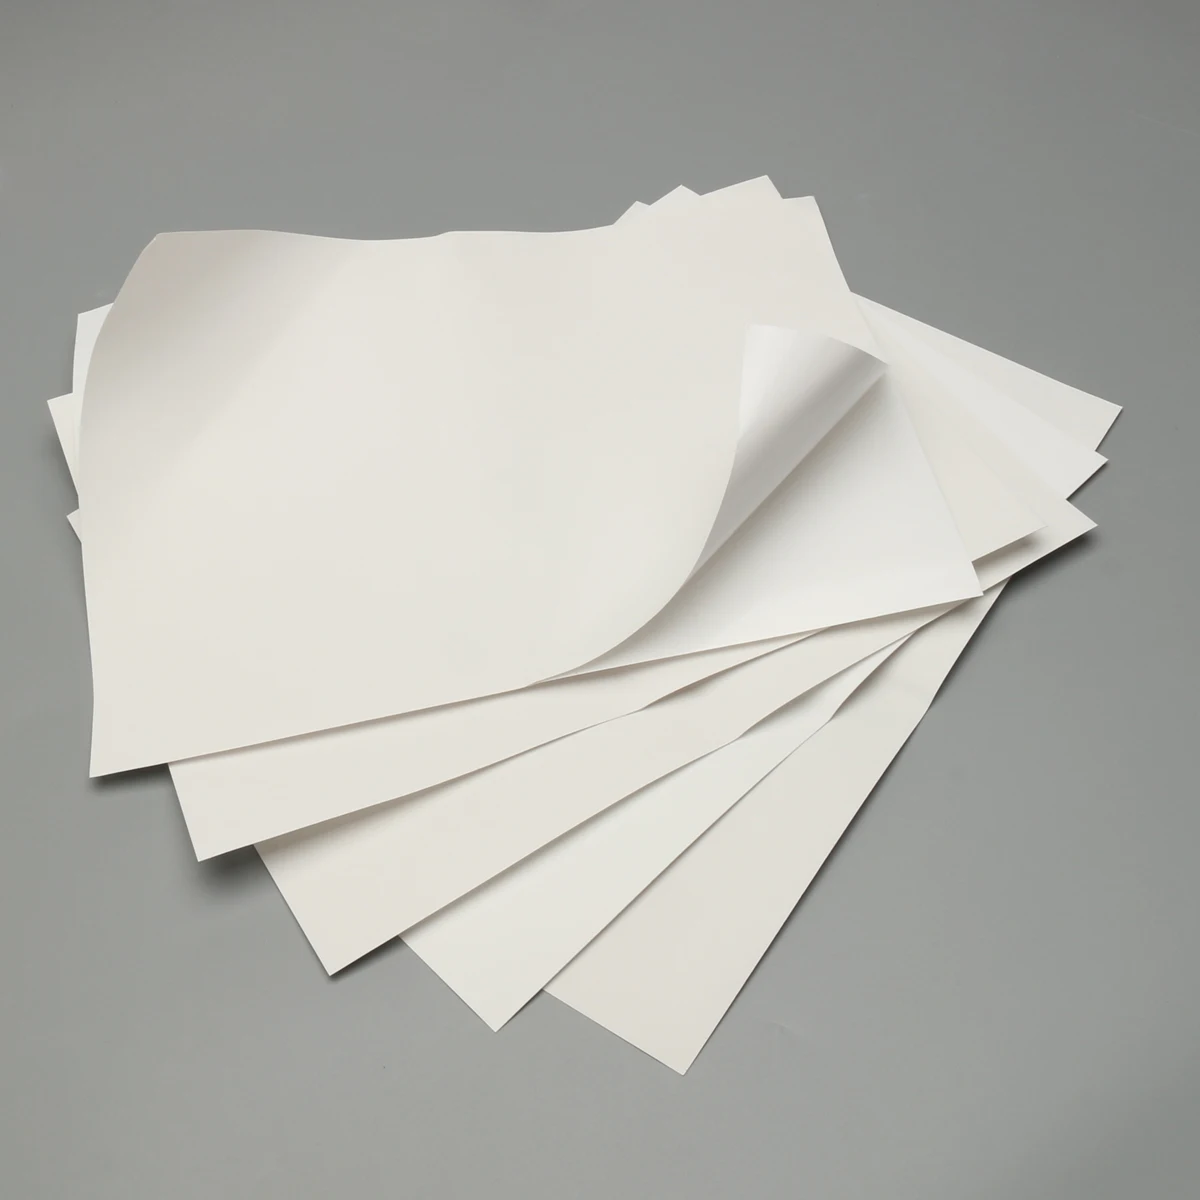 Лист бумаги. Белая бумага. Листовая бумага. Бумажный лист.